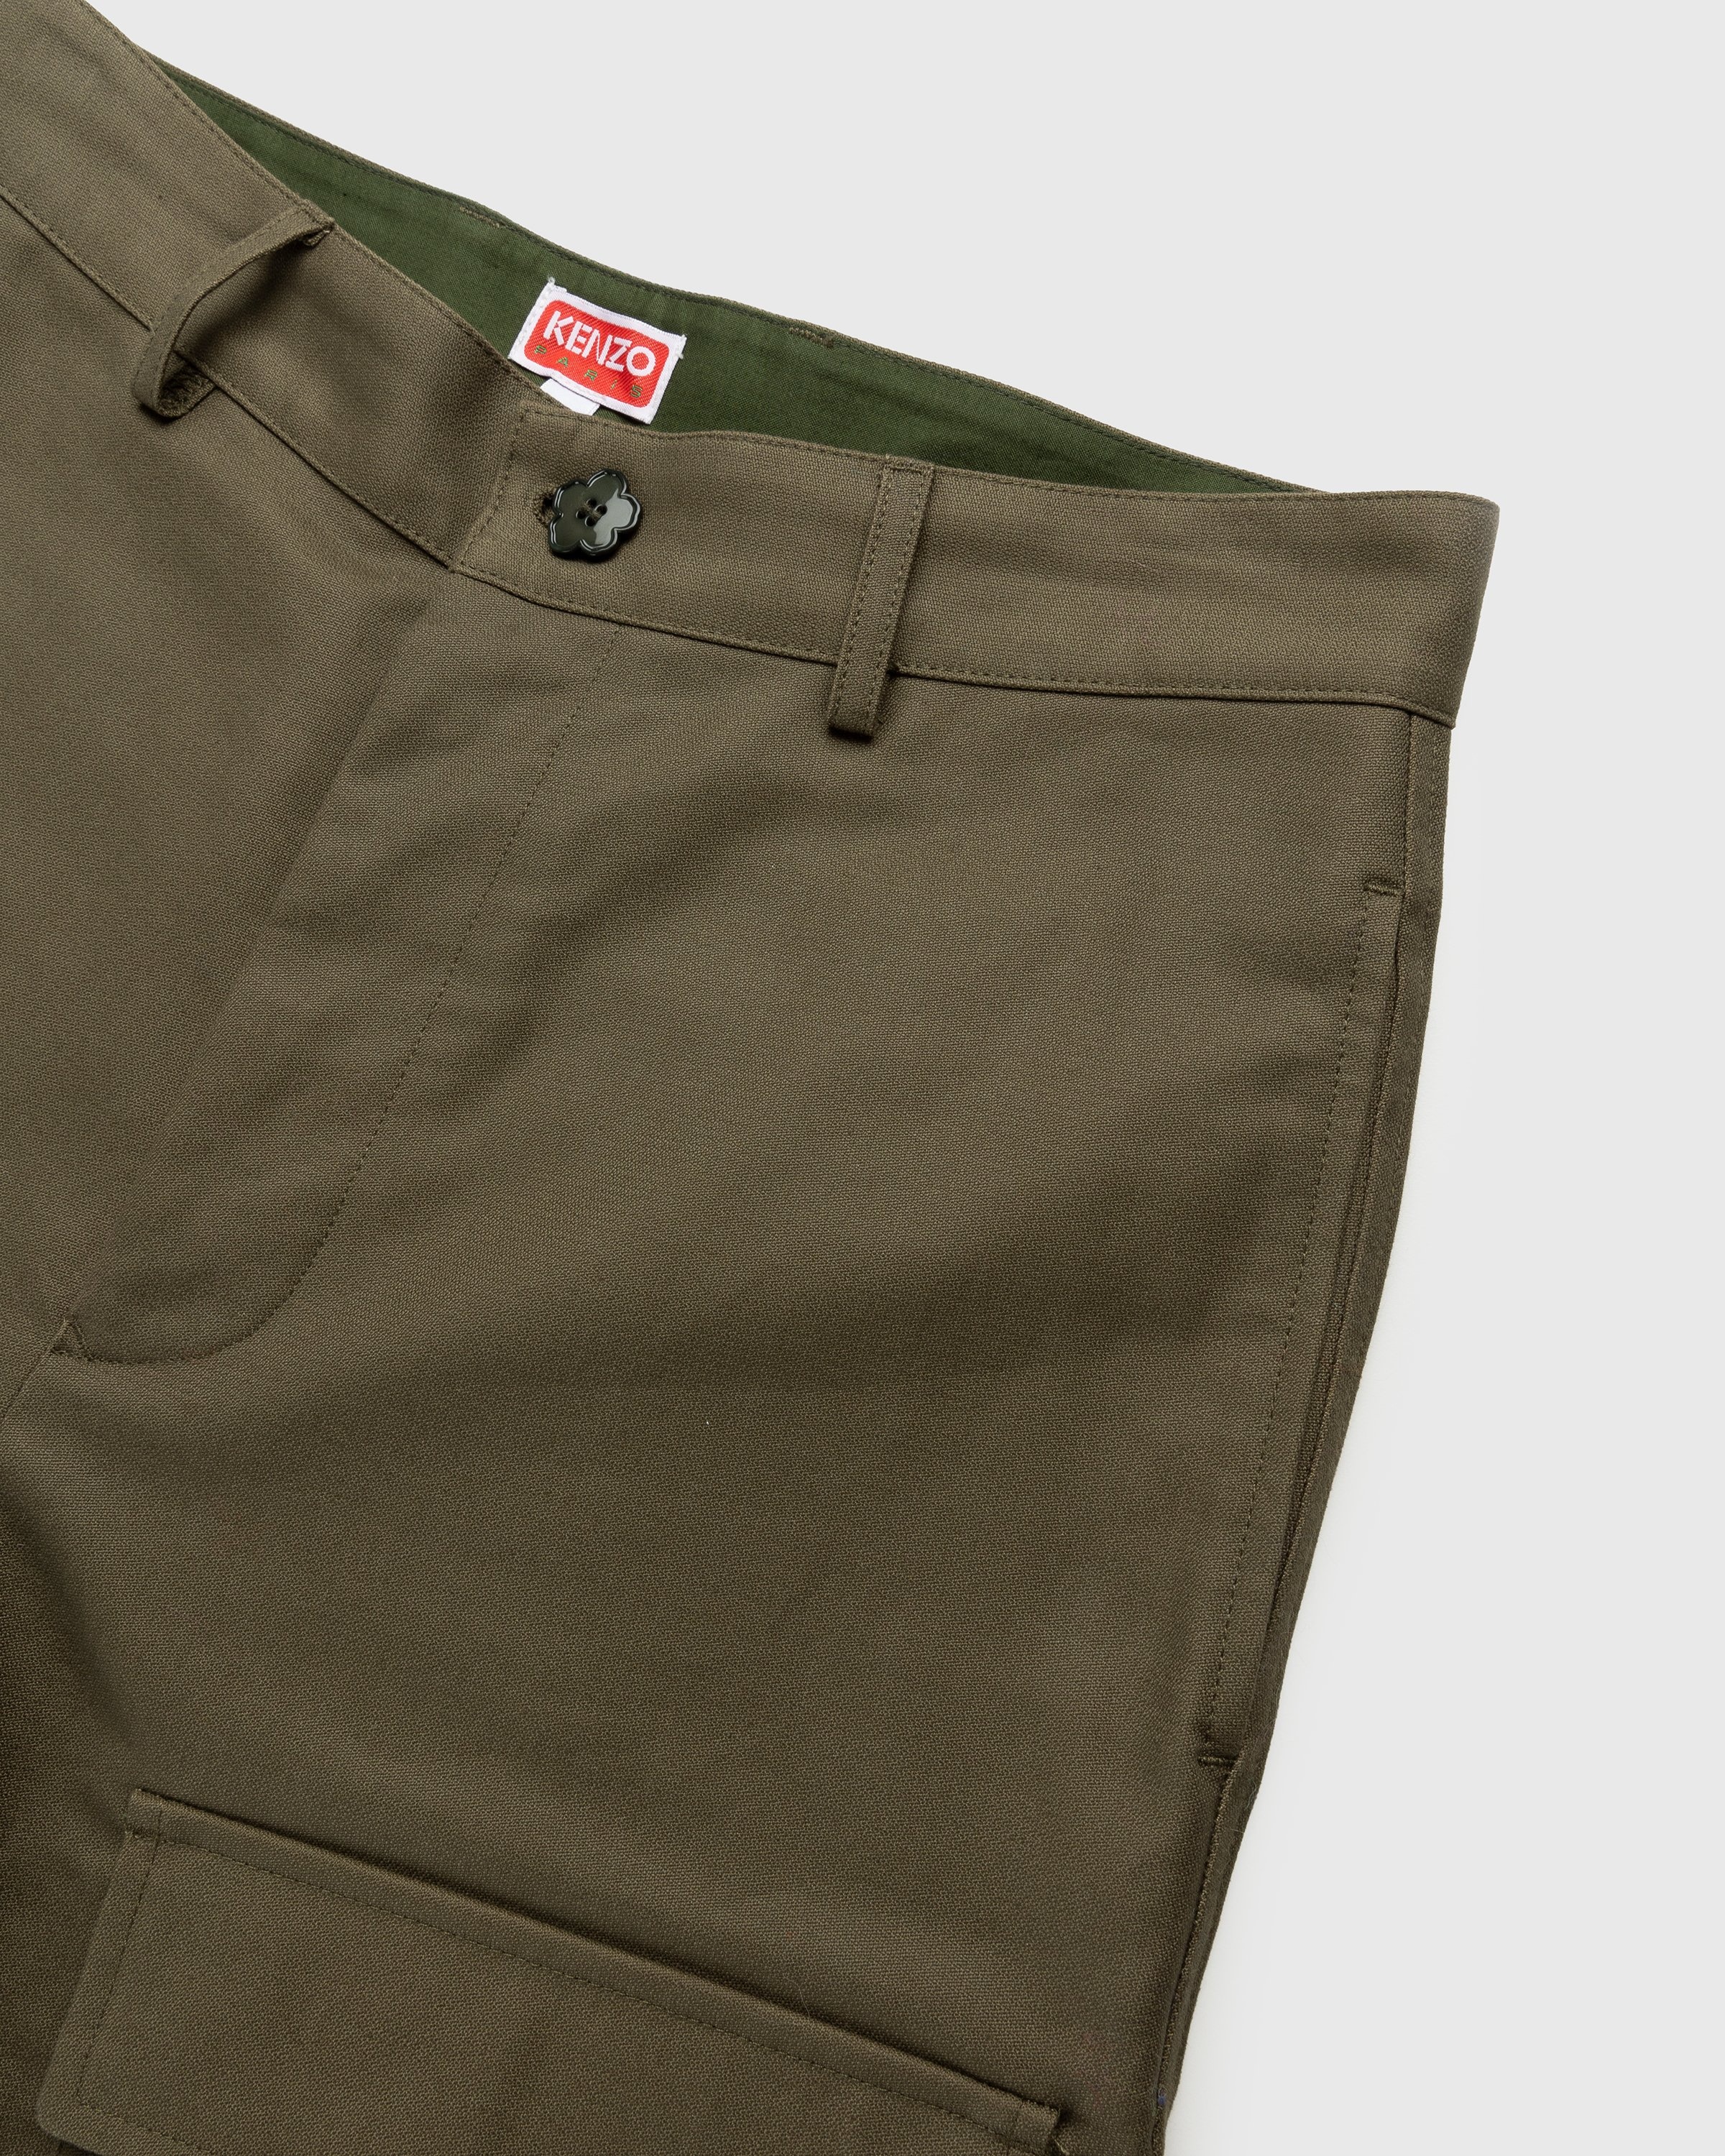 Kenzo – Tailored Pants Dark Khaki - Cargo Pants - Green - Image 4